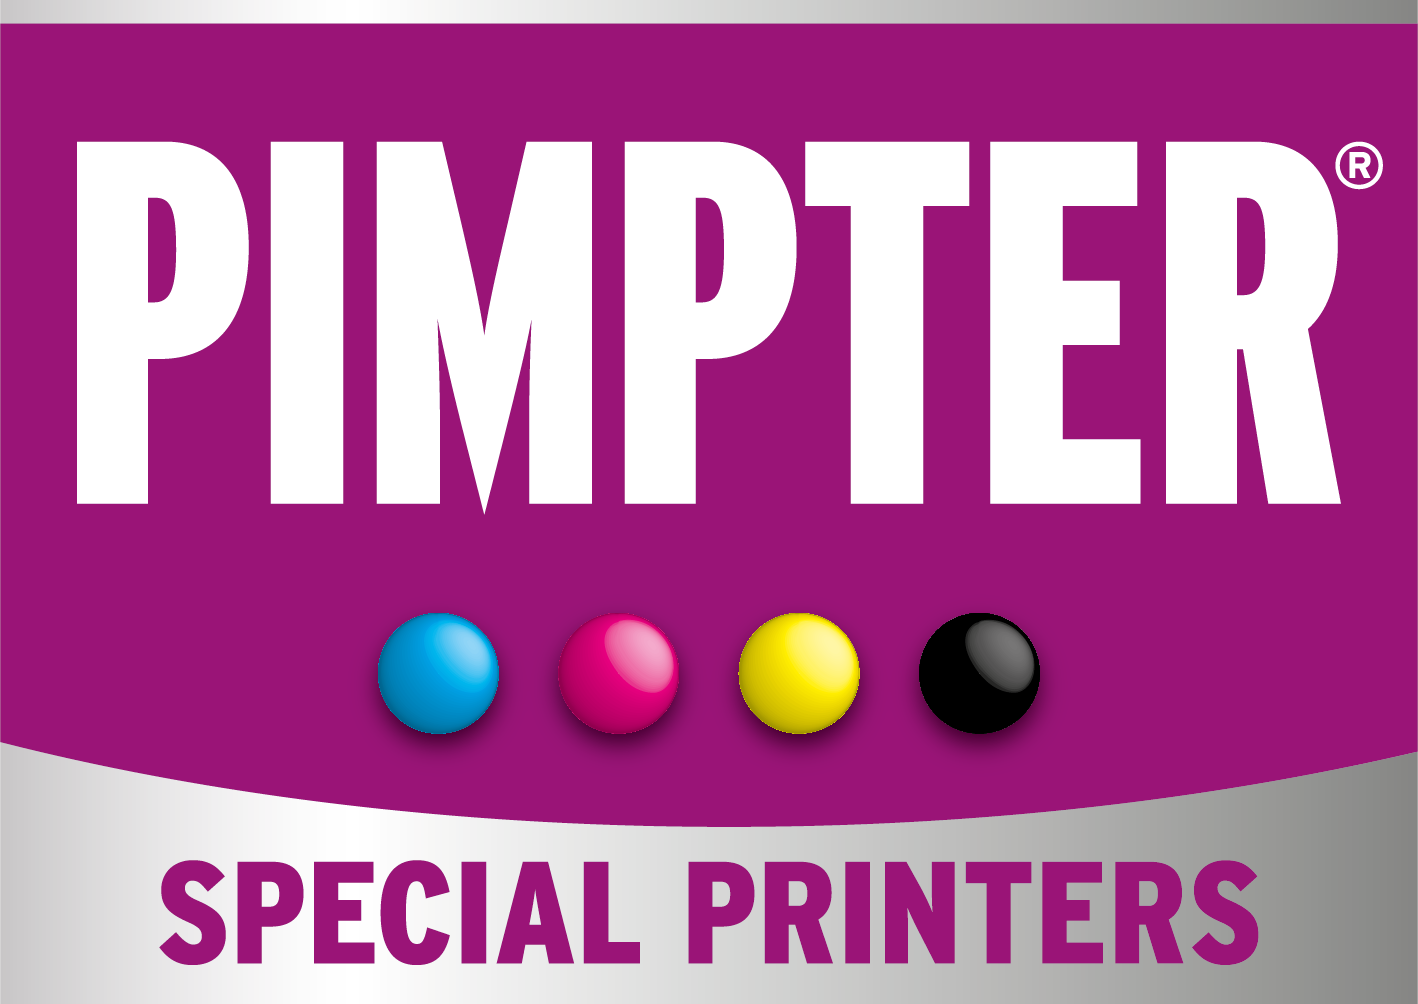 Pimpter Special Printers